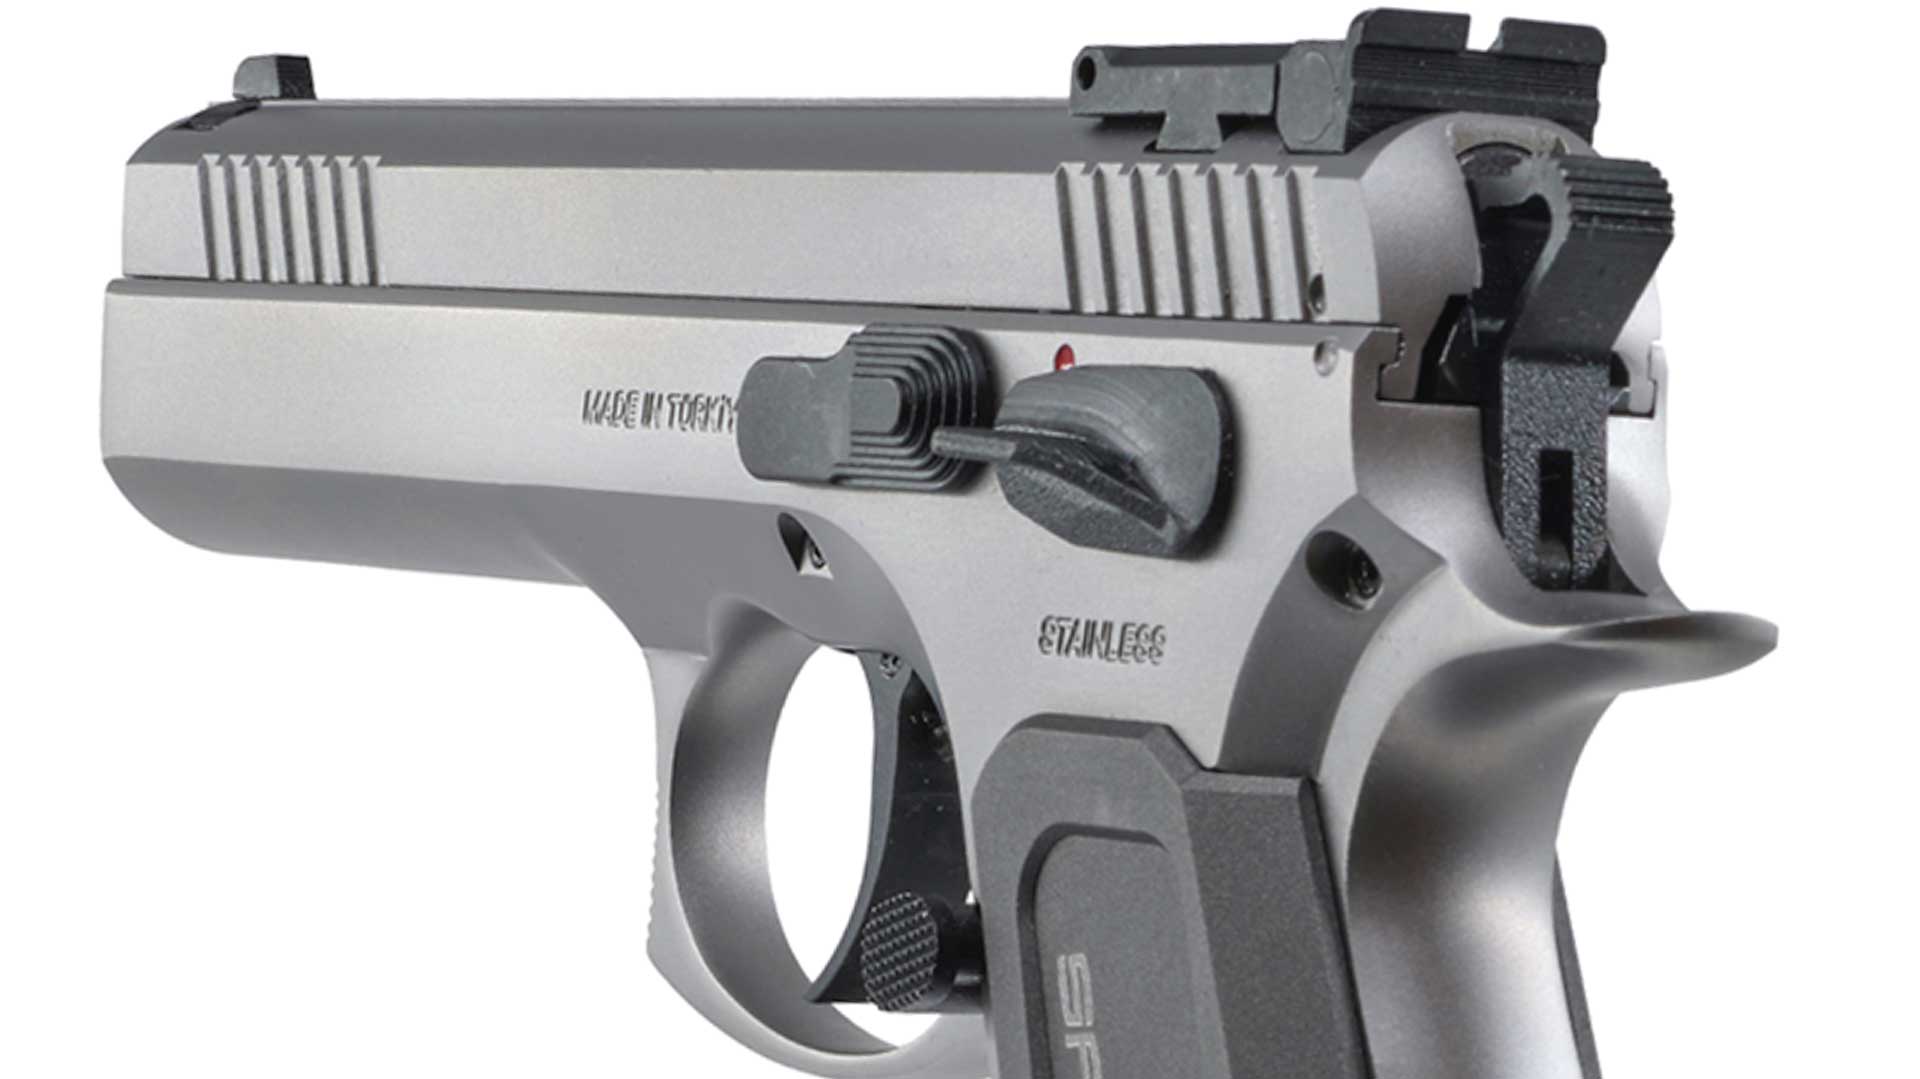 gun pistol gray metal stainless steel handgun details controls levers